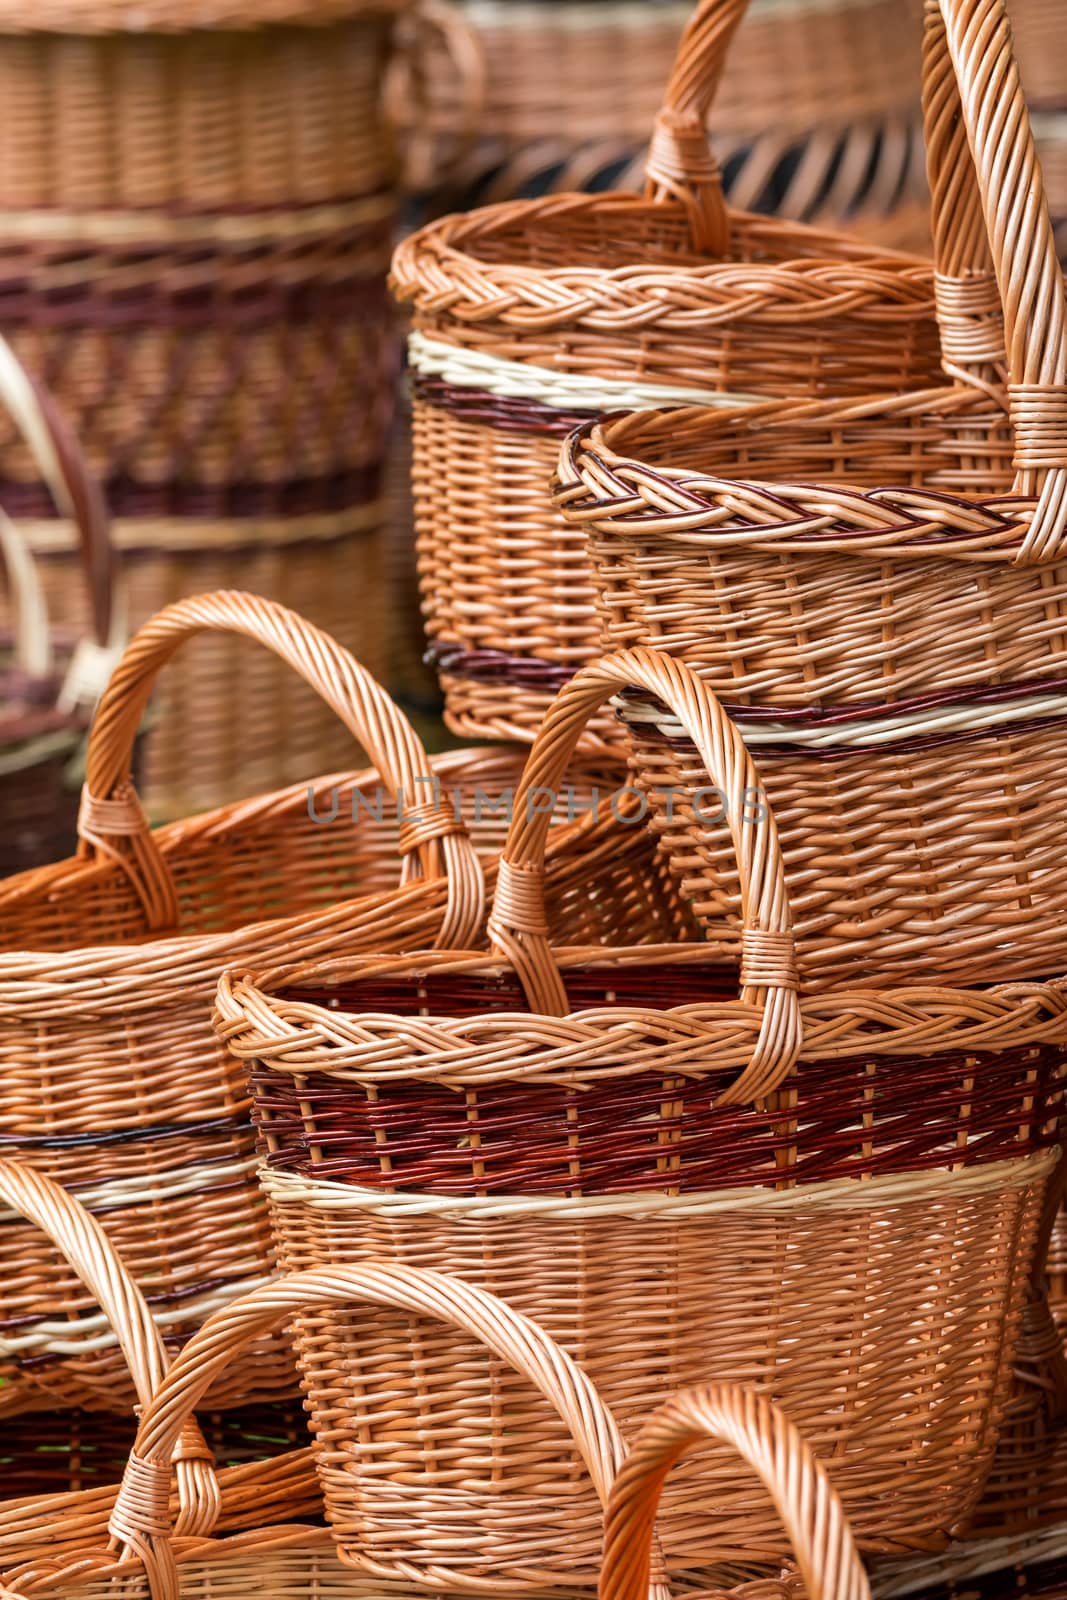 Handmade wicker basket by Digoarpi